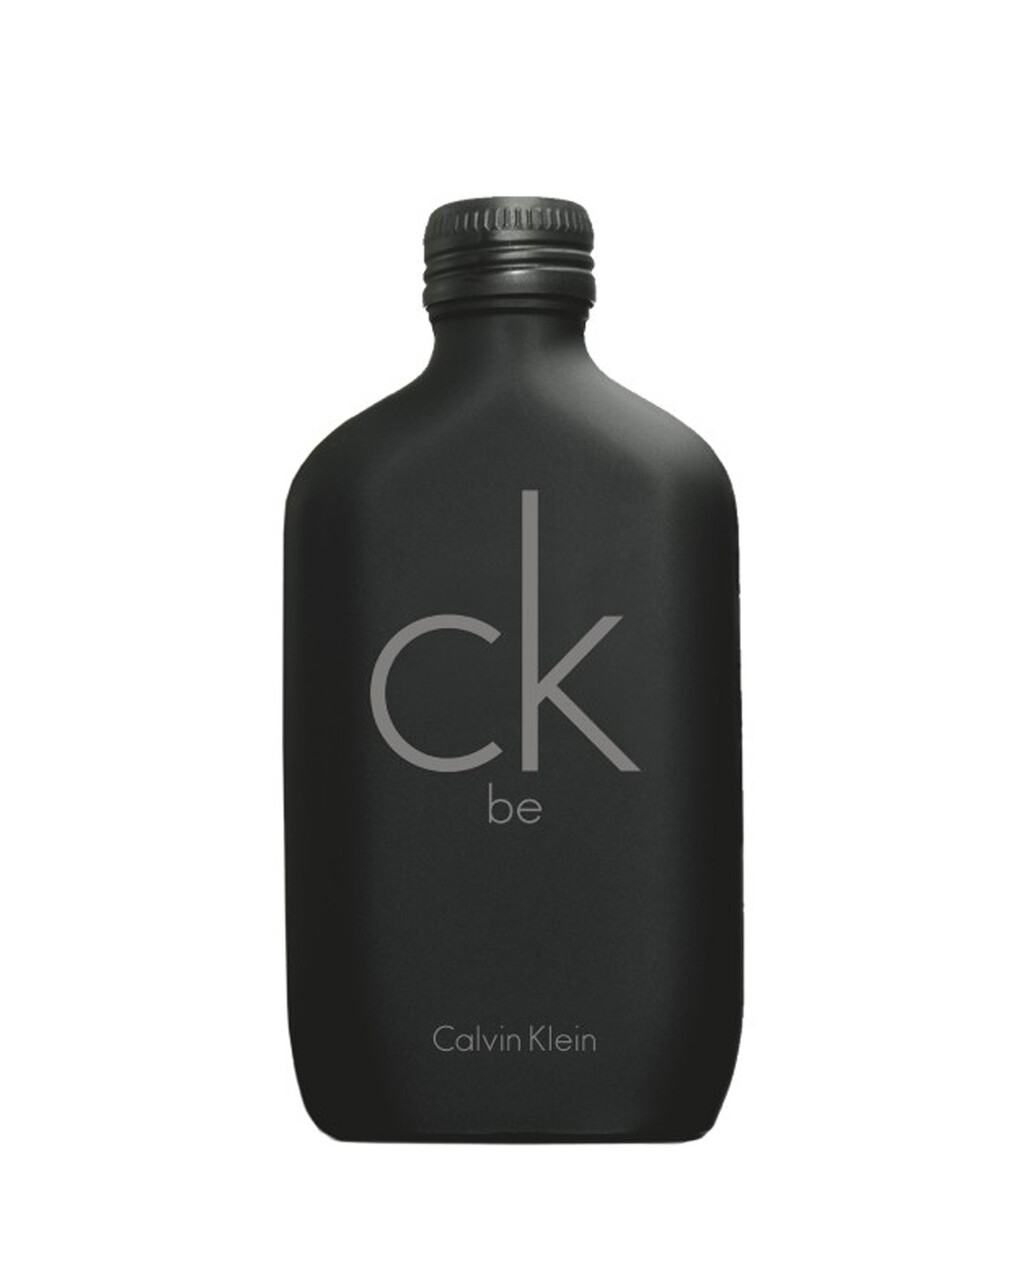 Calvin Klein Ck be 淡香水 100 Ml